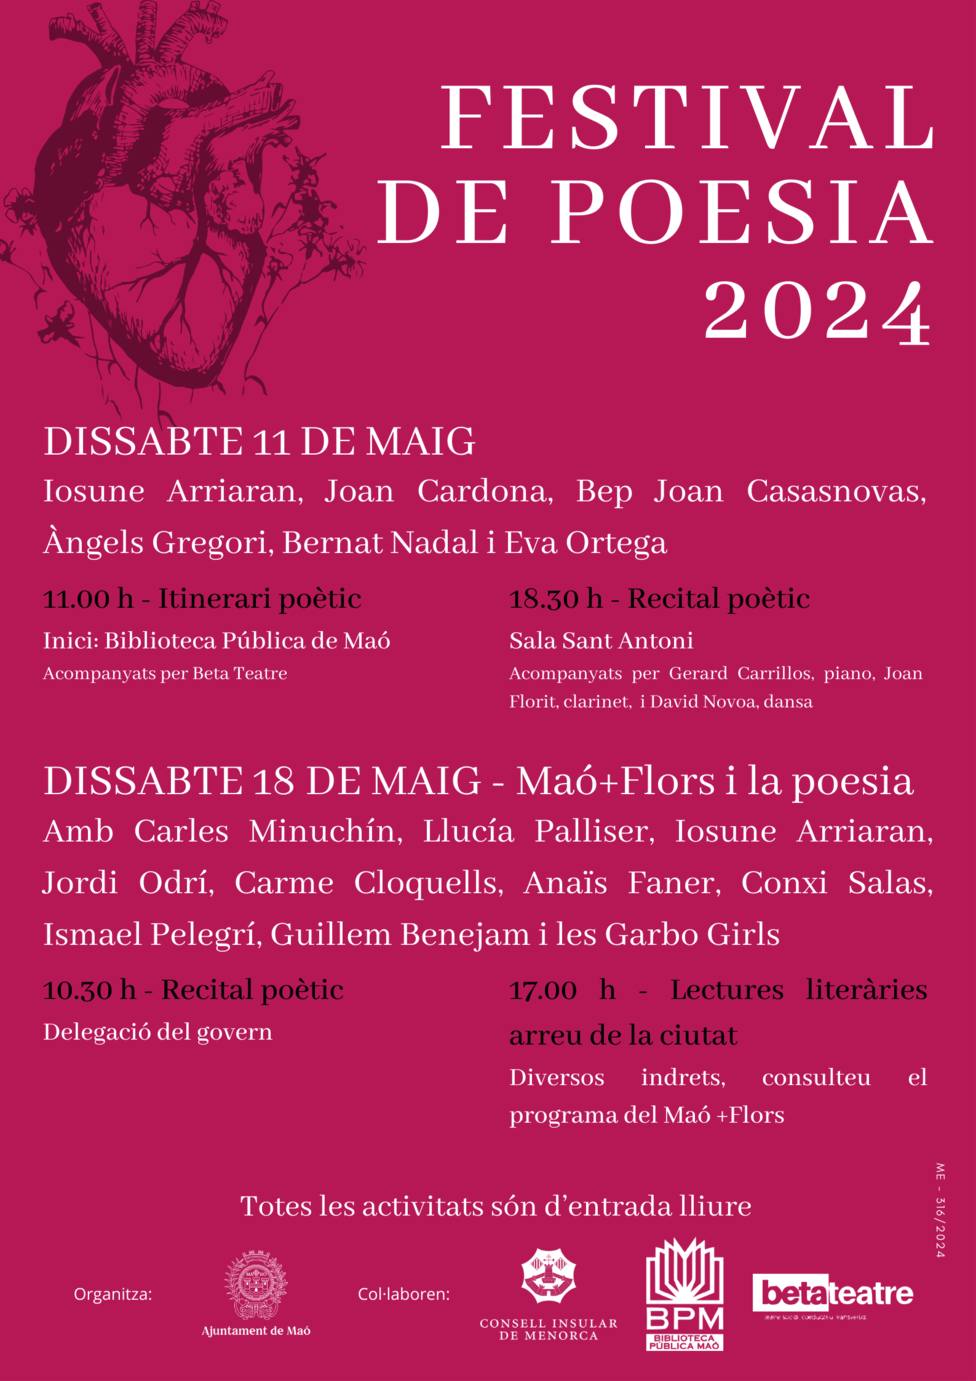 ctv-7t9-festival-de-poesia-2024---cartell